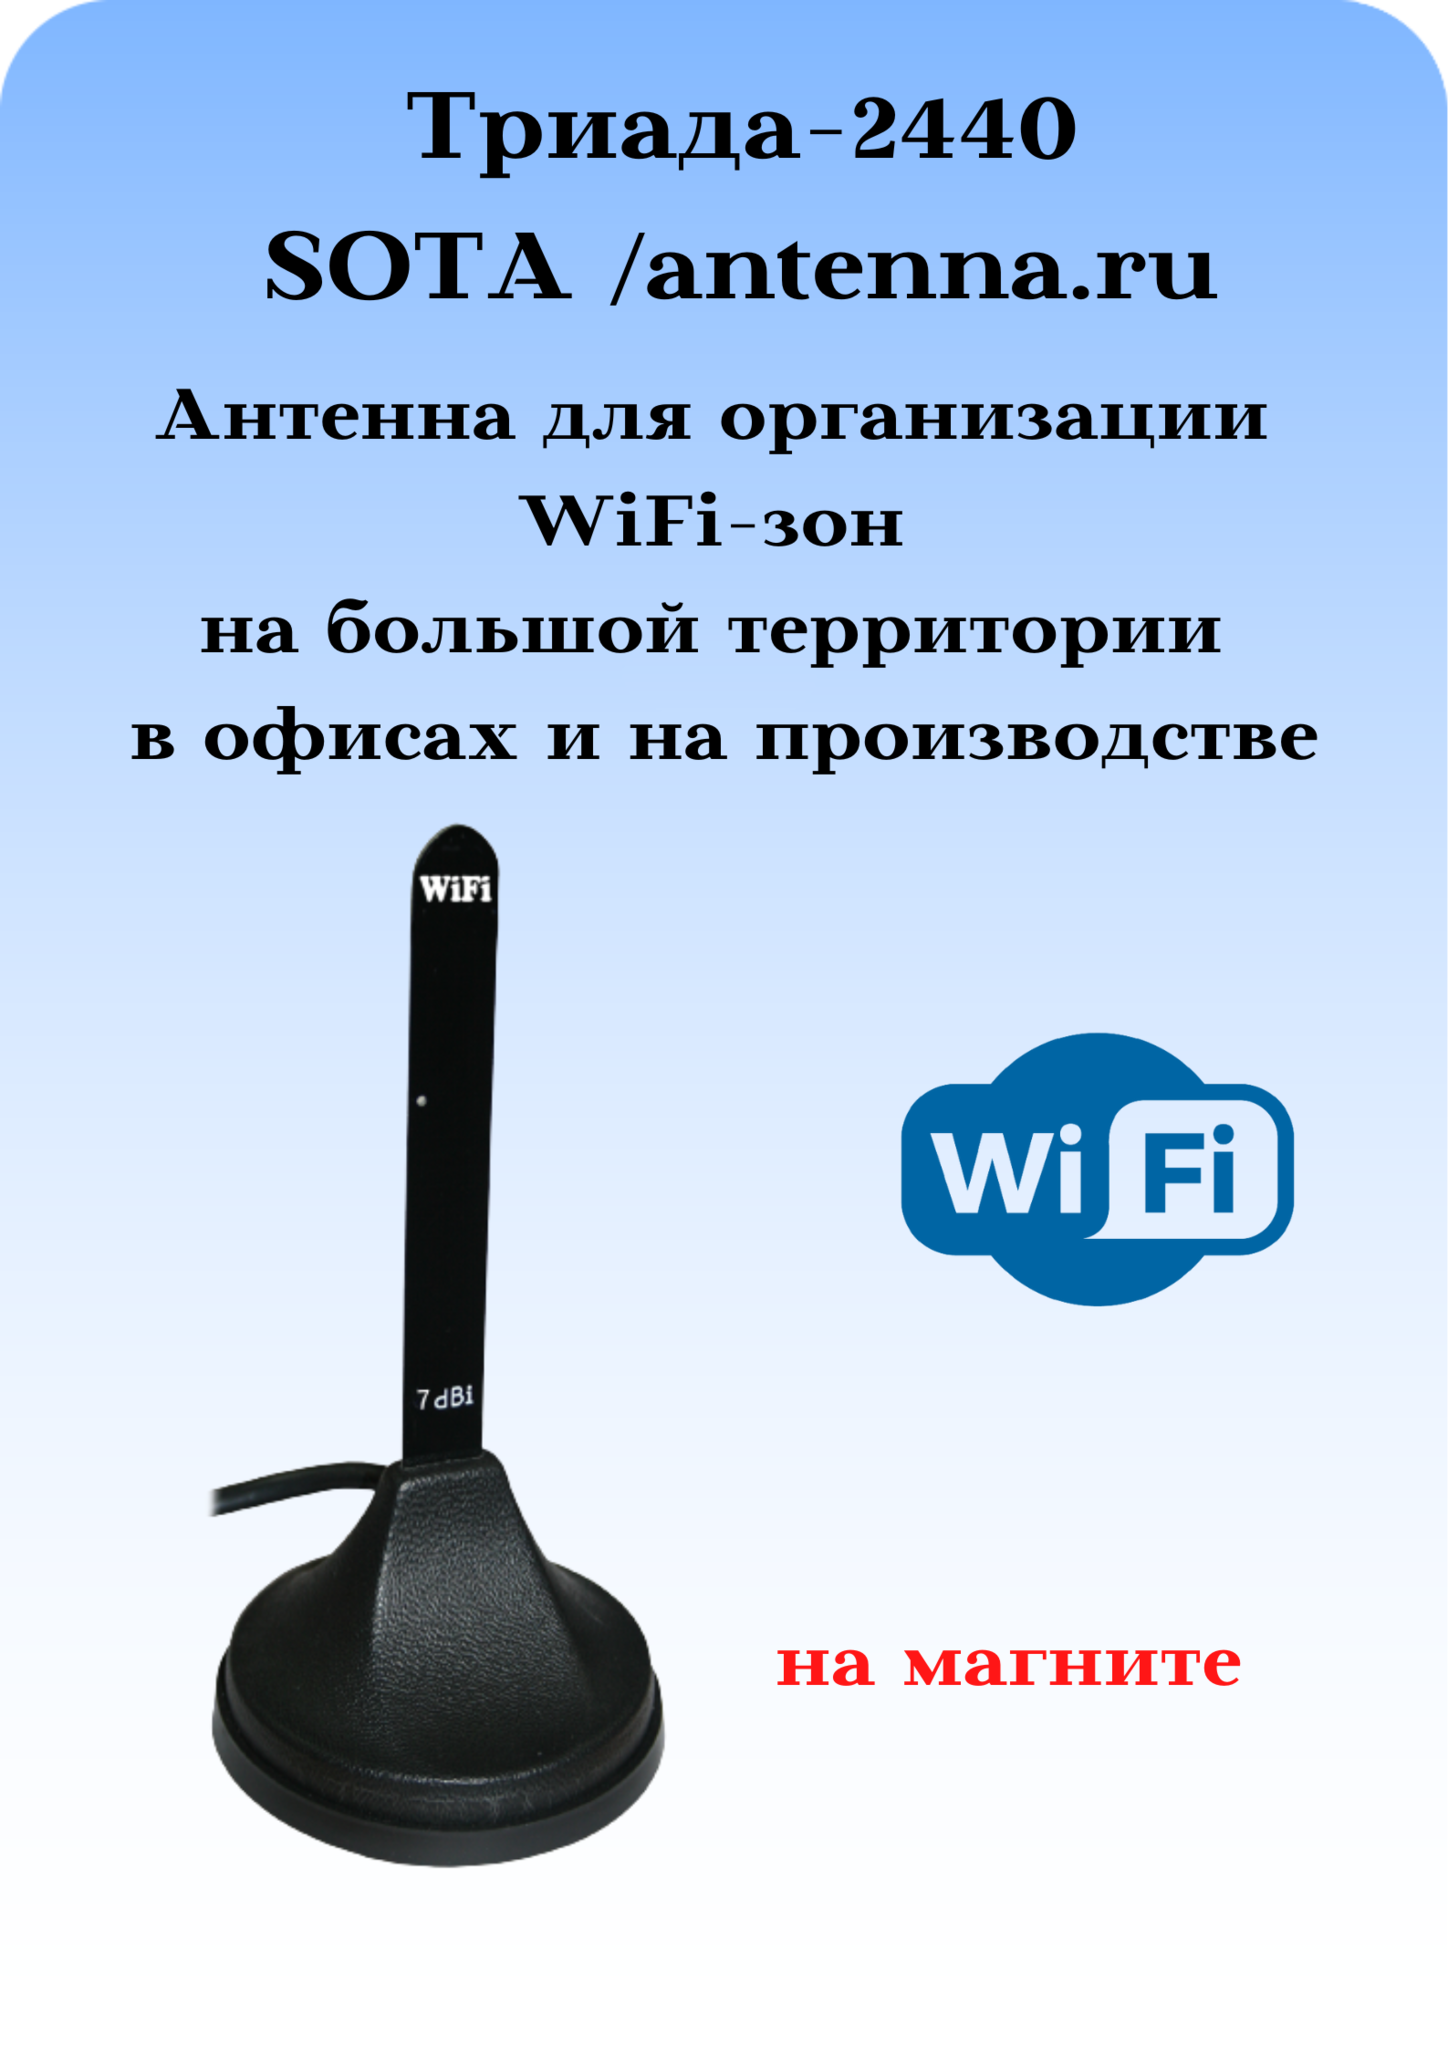 Триада-2440/antenna.ru. Антенна WiFi круговая на магнитном основании